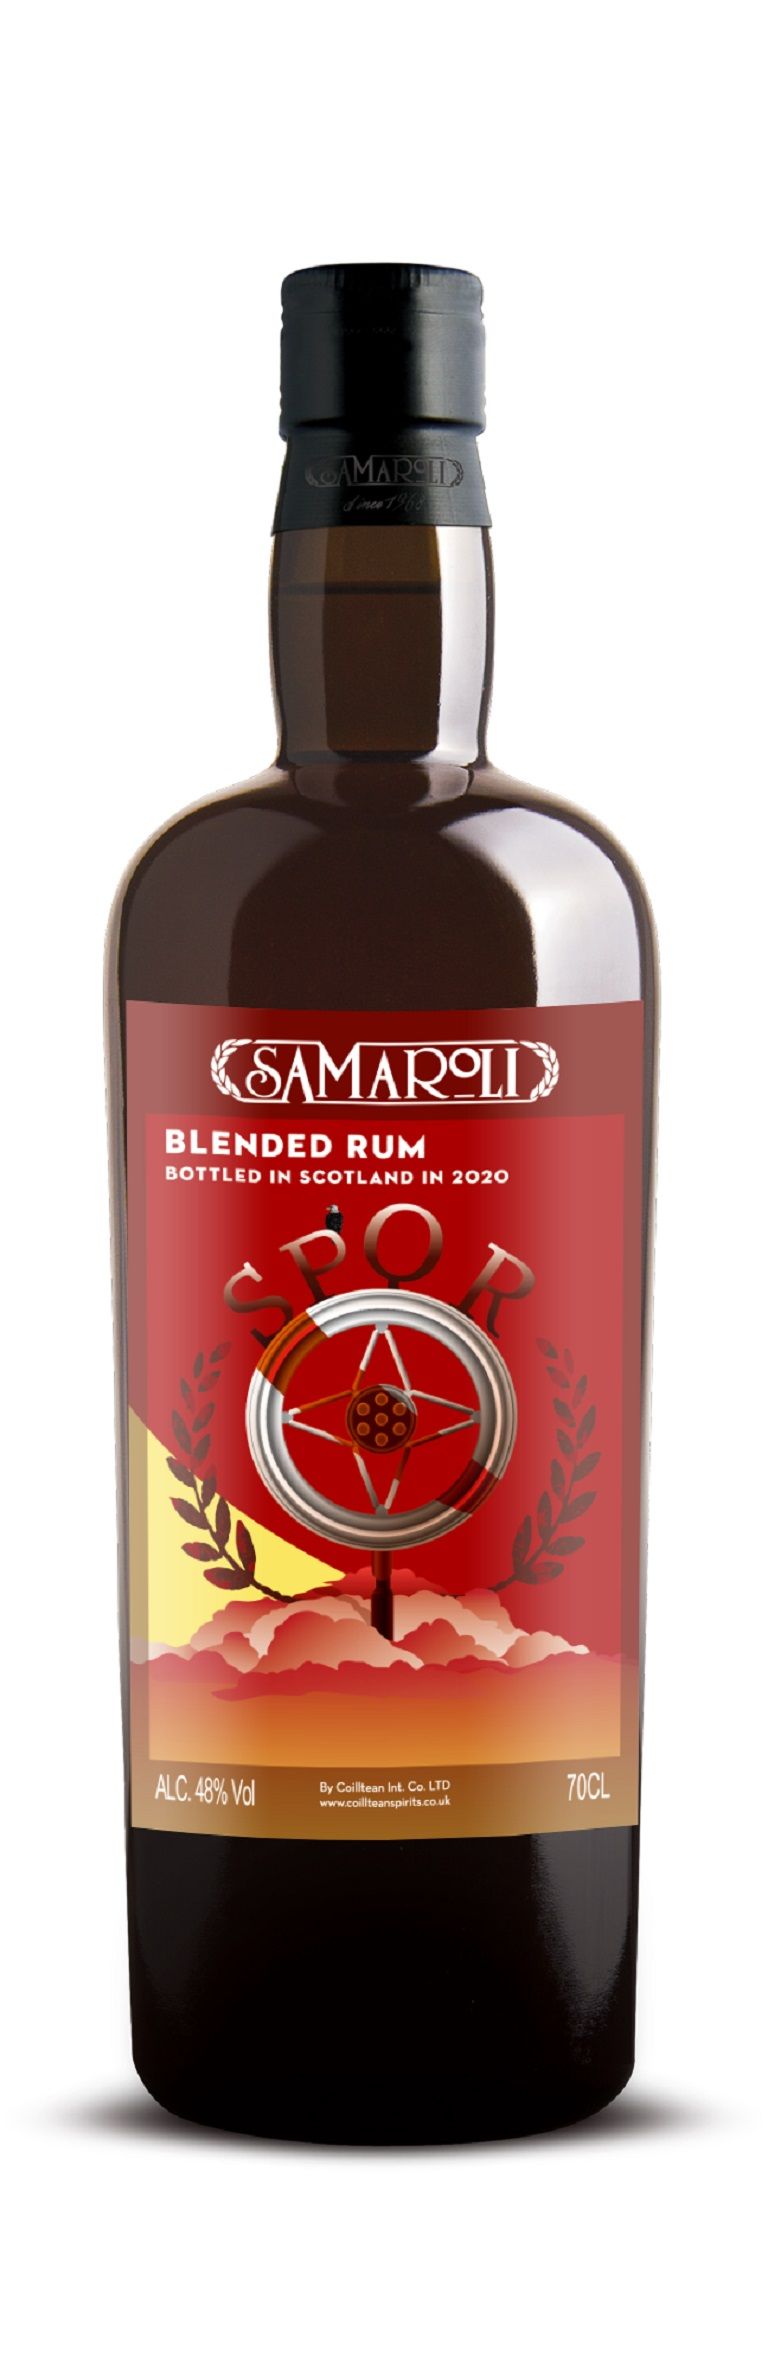 SPQR (Spirit Pure Quality Rum) - Blended Rum - ed. 2020 - 70 cl